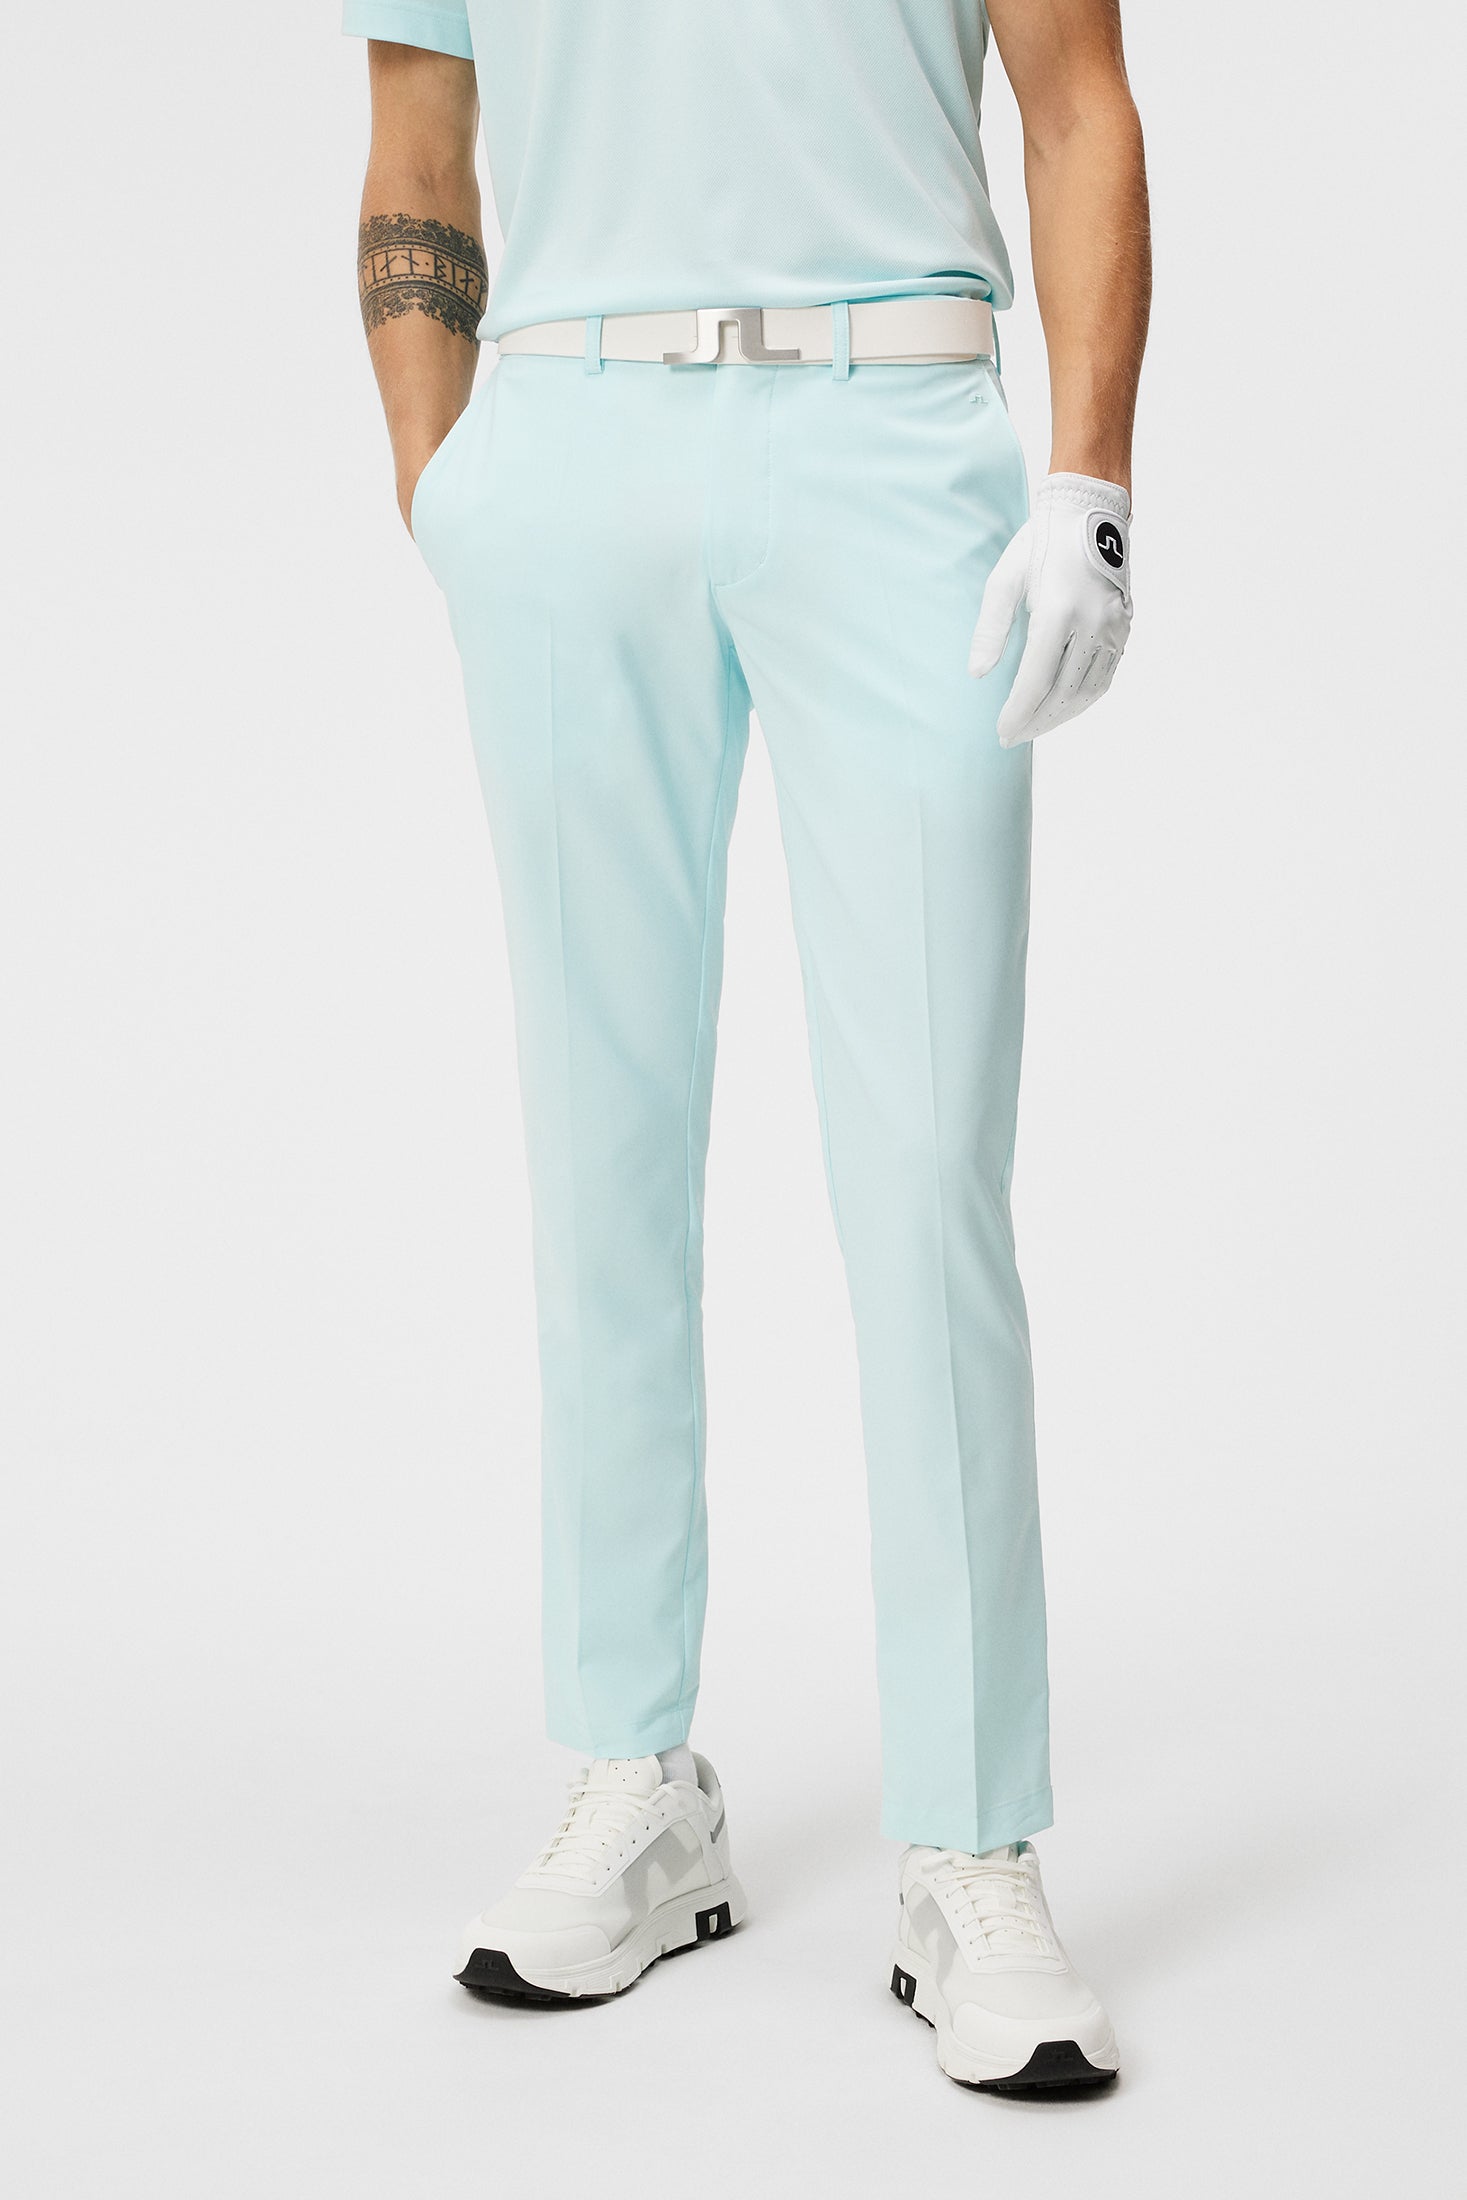 Best Golf Pants 2022: The 8 best men's pants on the market right now